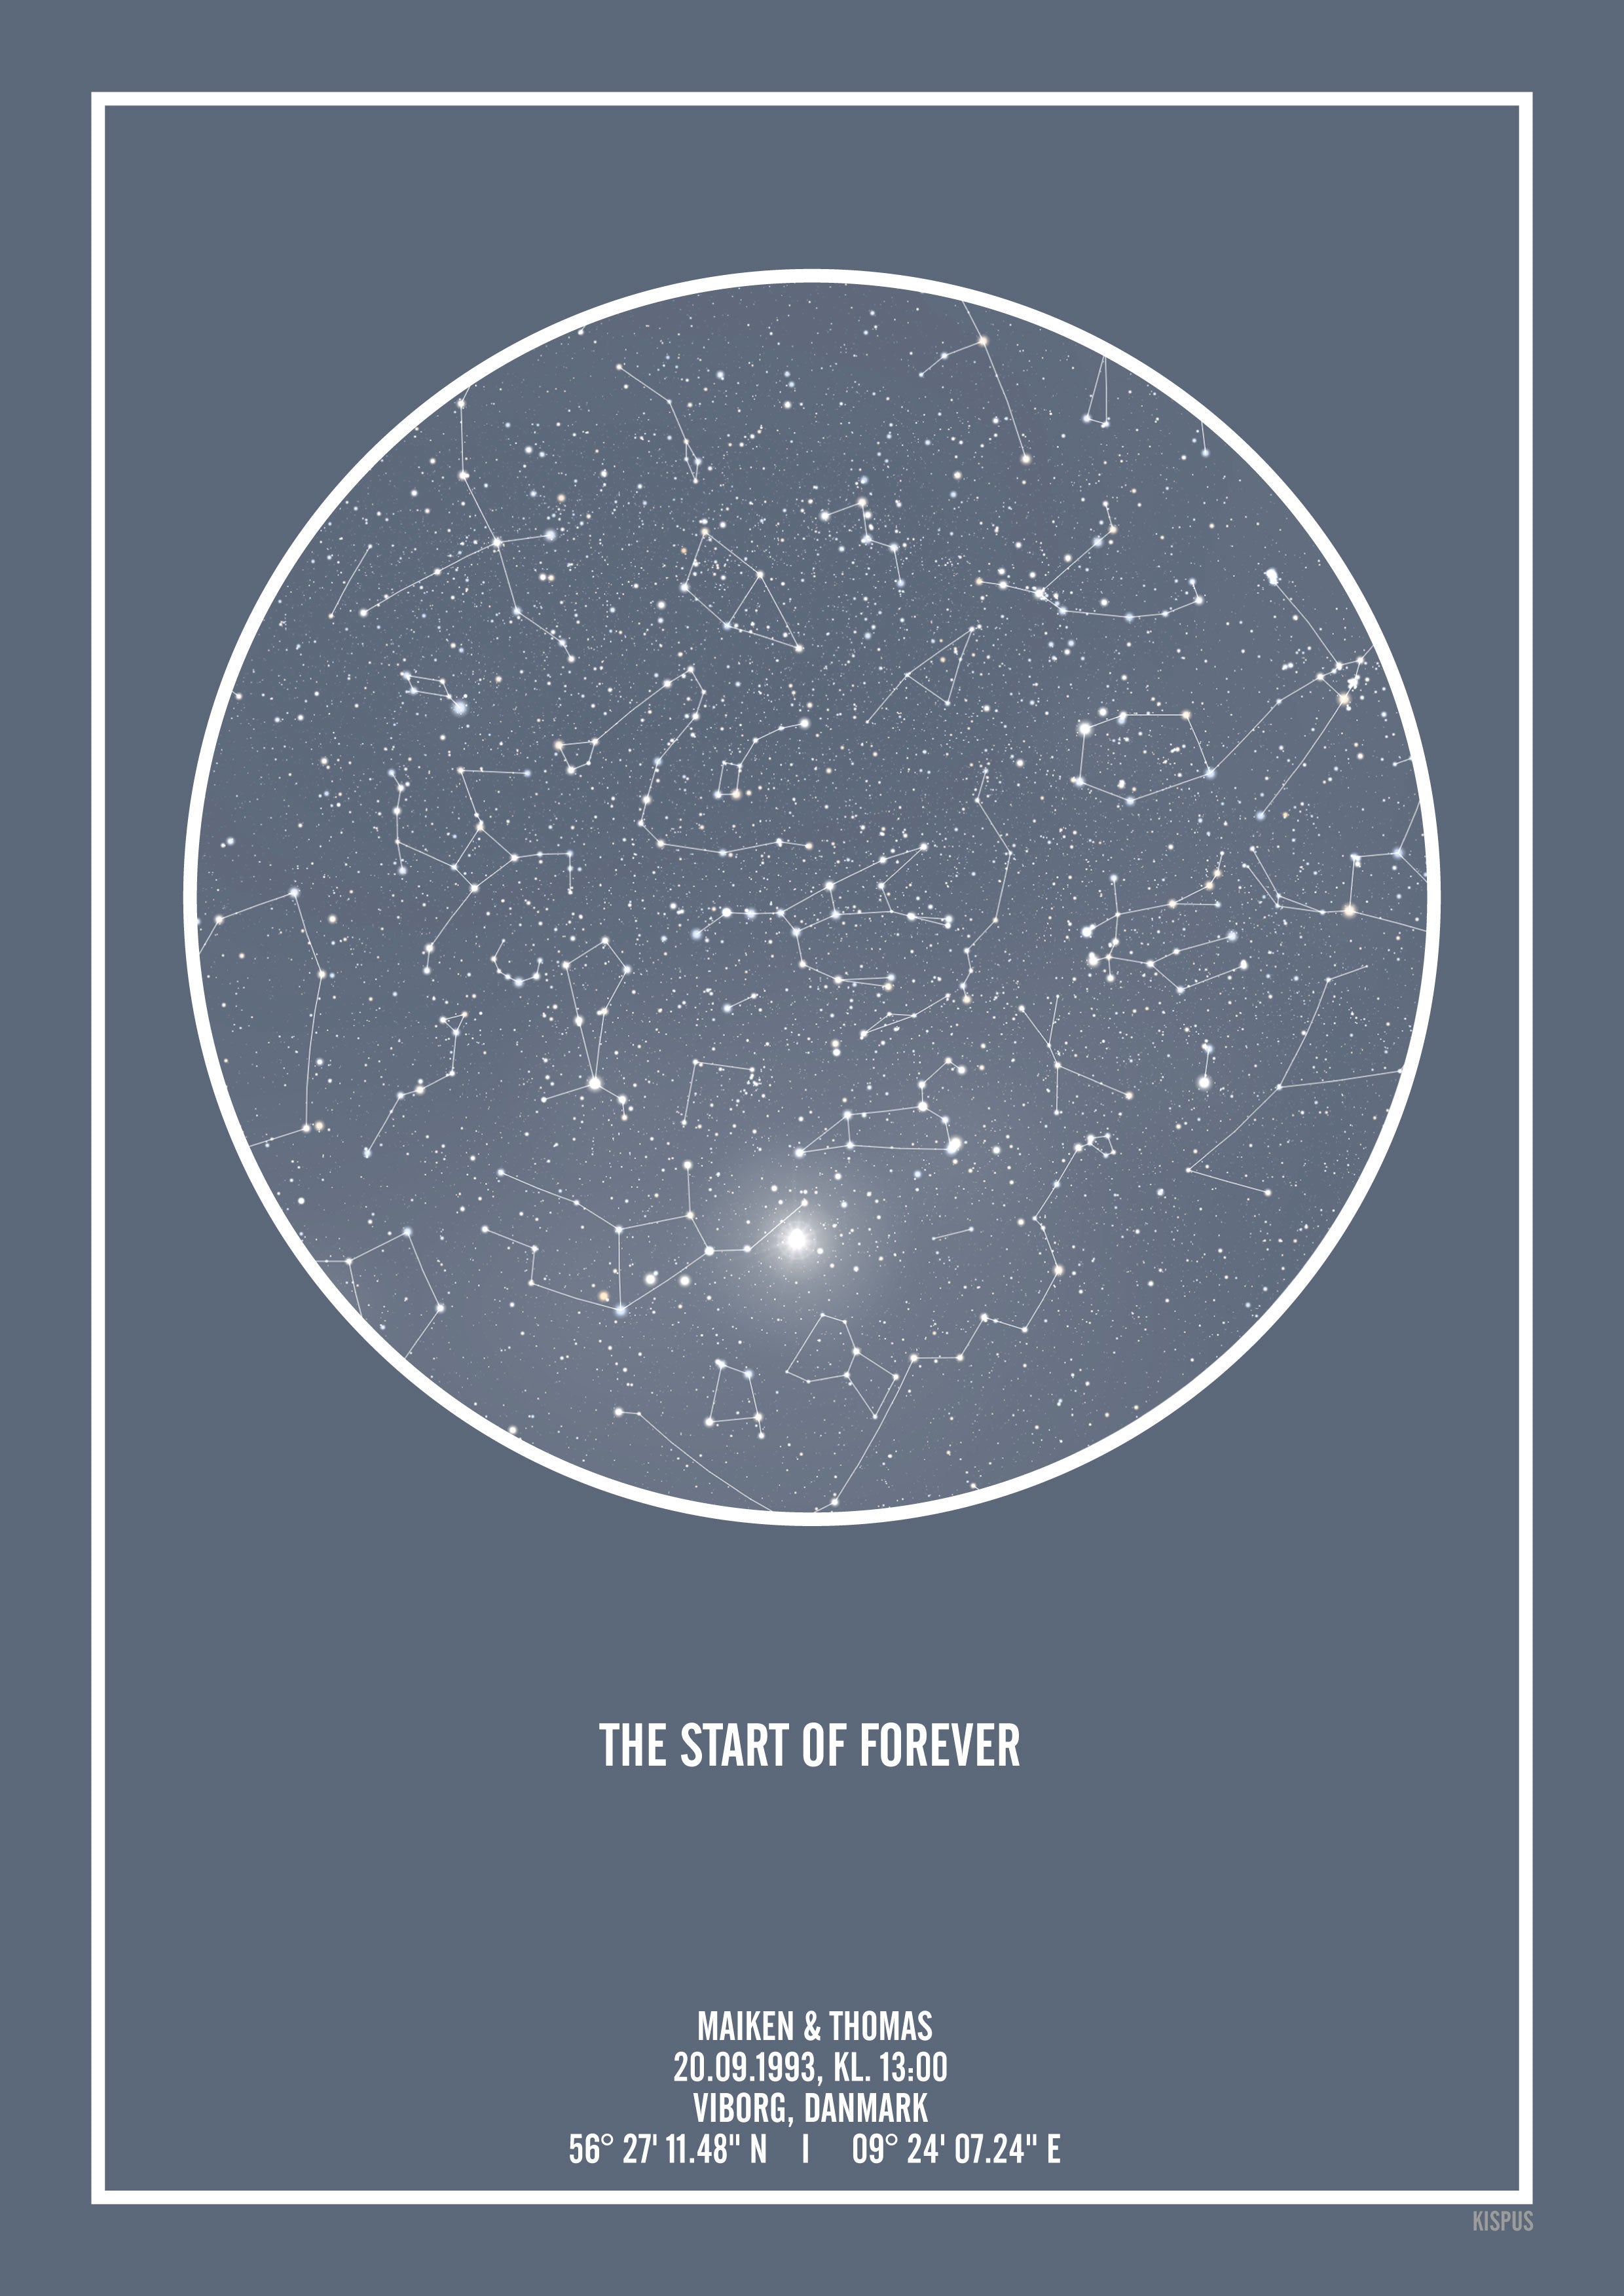 Se PERSONLIG STJERNEHIMMEL PLAKAT (BLÅGRÅ) - 50x70 / Hvid tekst / Stjernehimmel med Stjernebilleder hos KISPUS